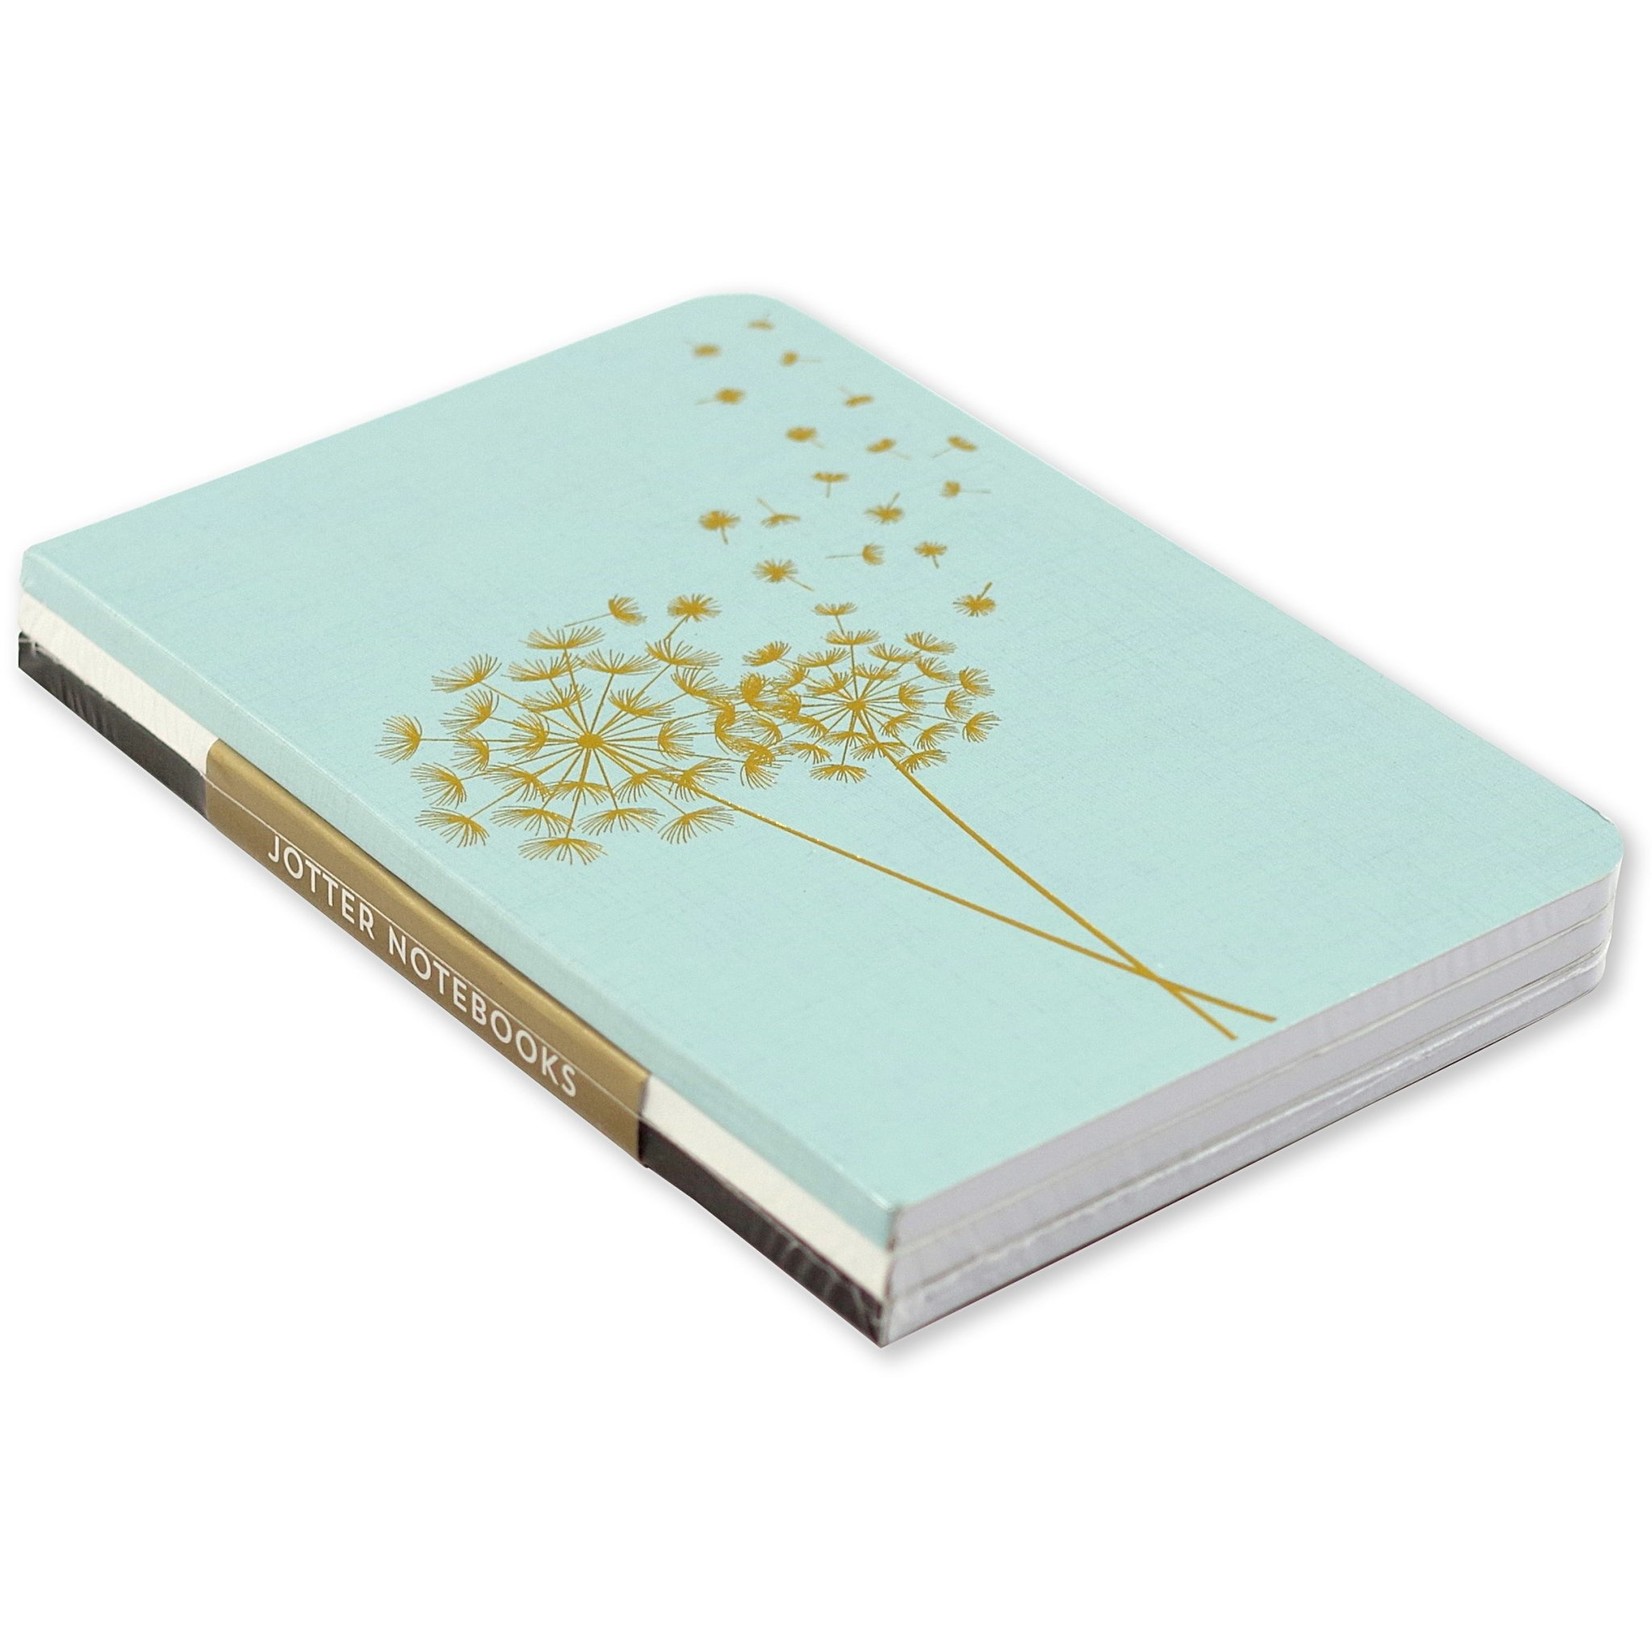 Jotter Notebooks: Dandelion Wishes (3-pack) (Dot Grid Pattern)